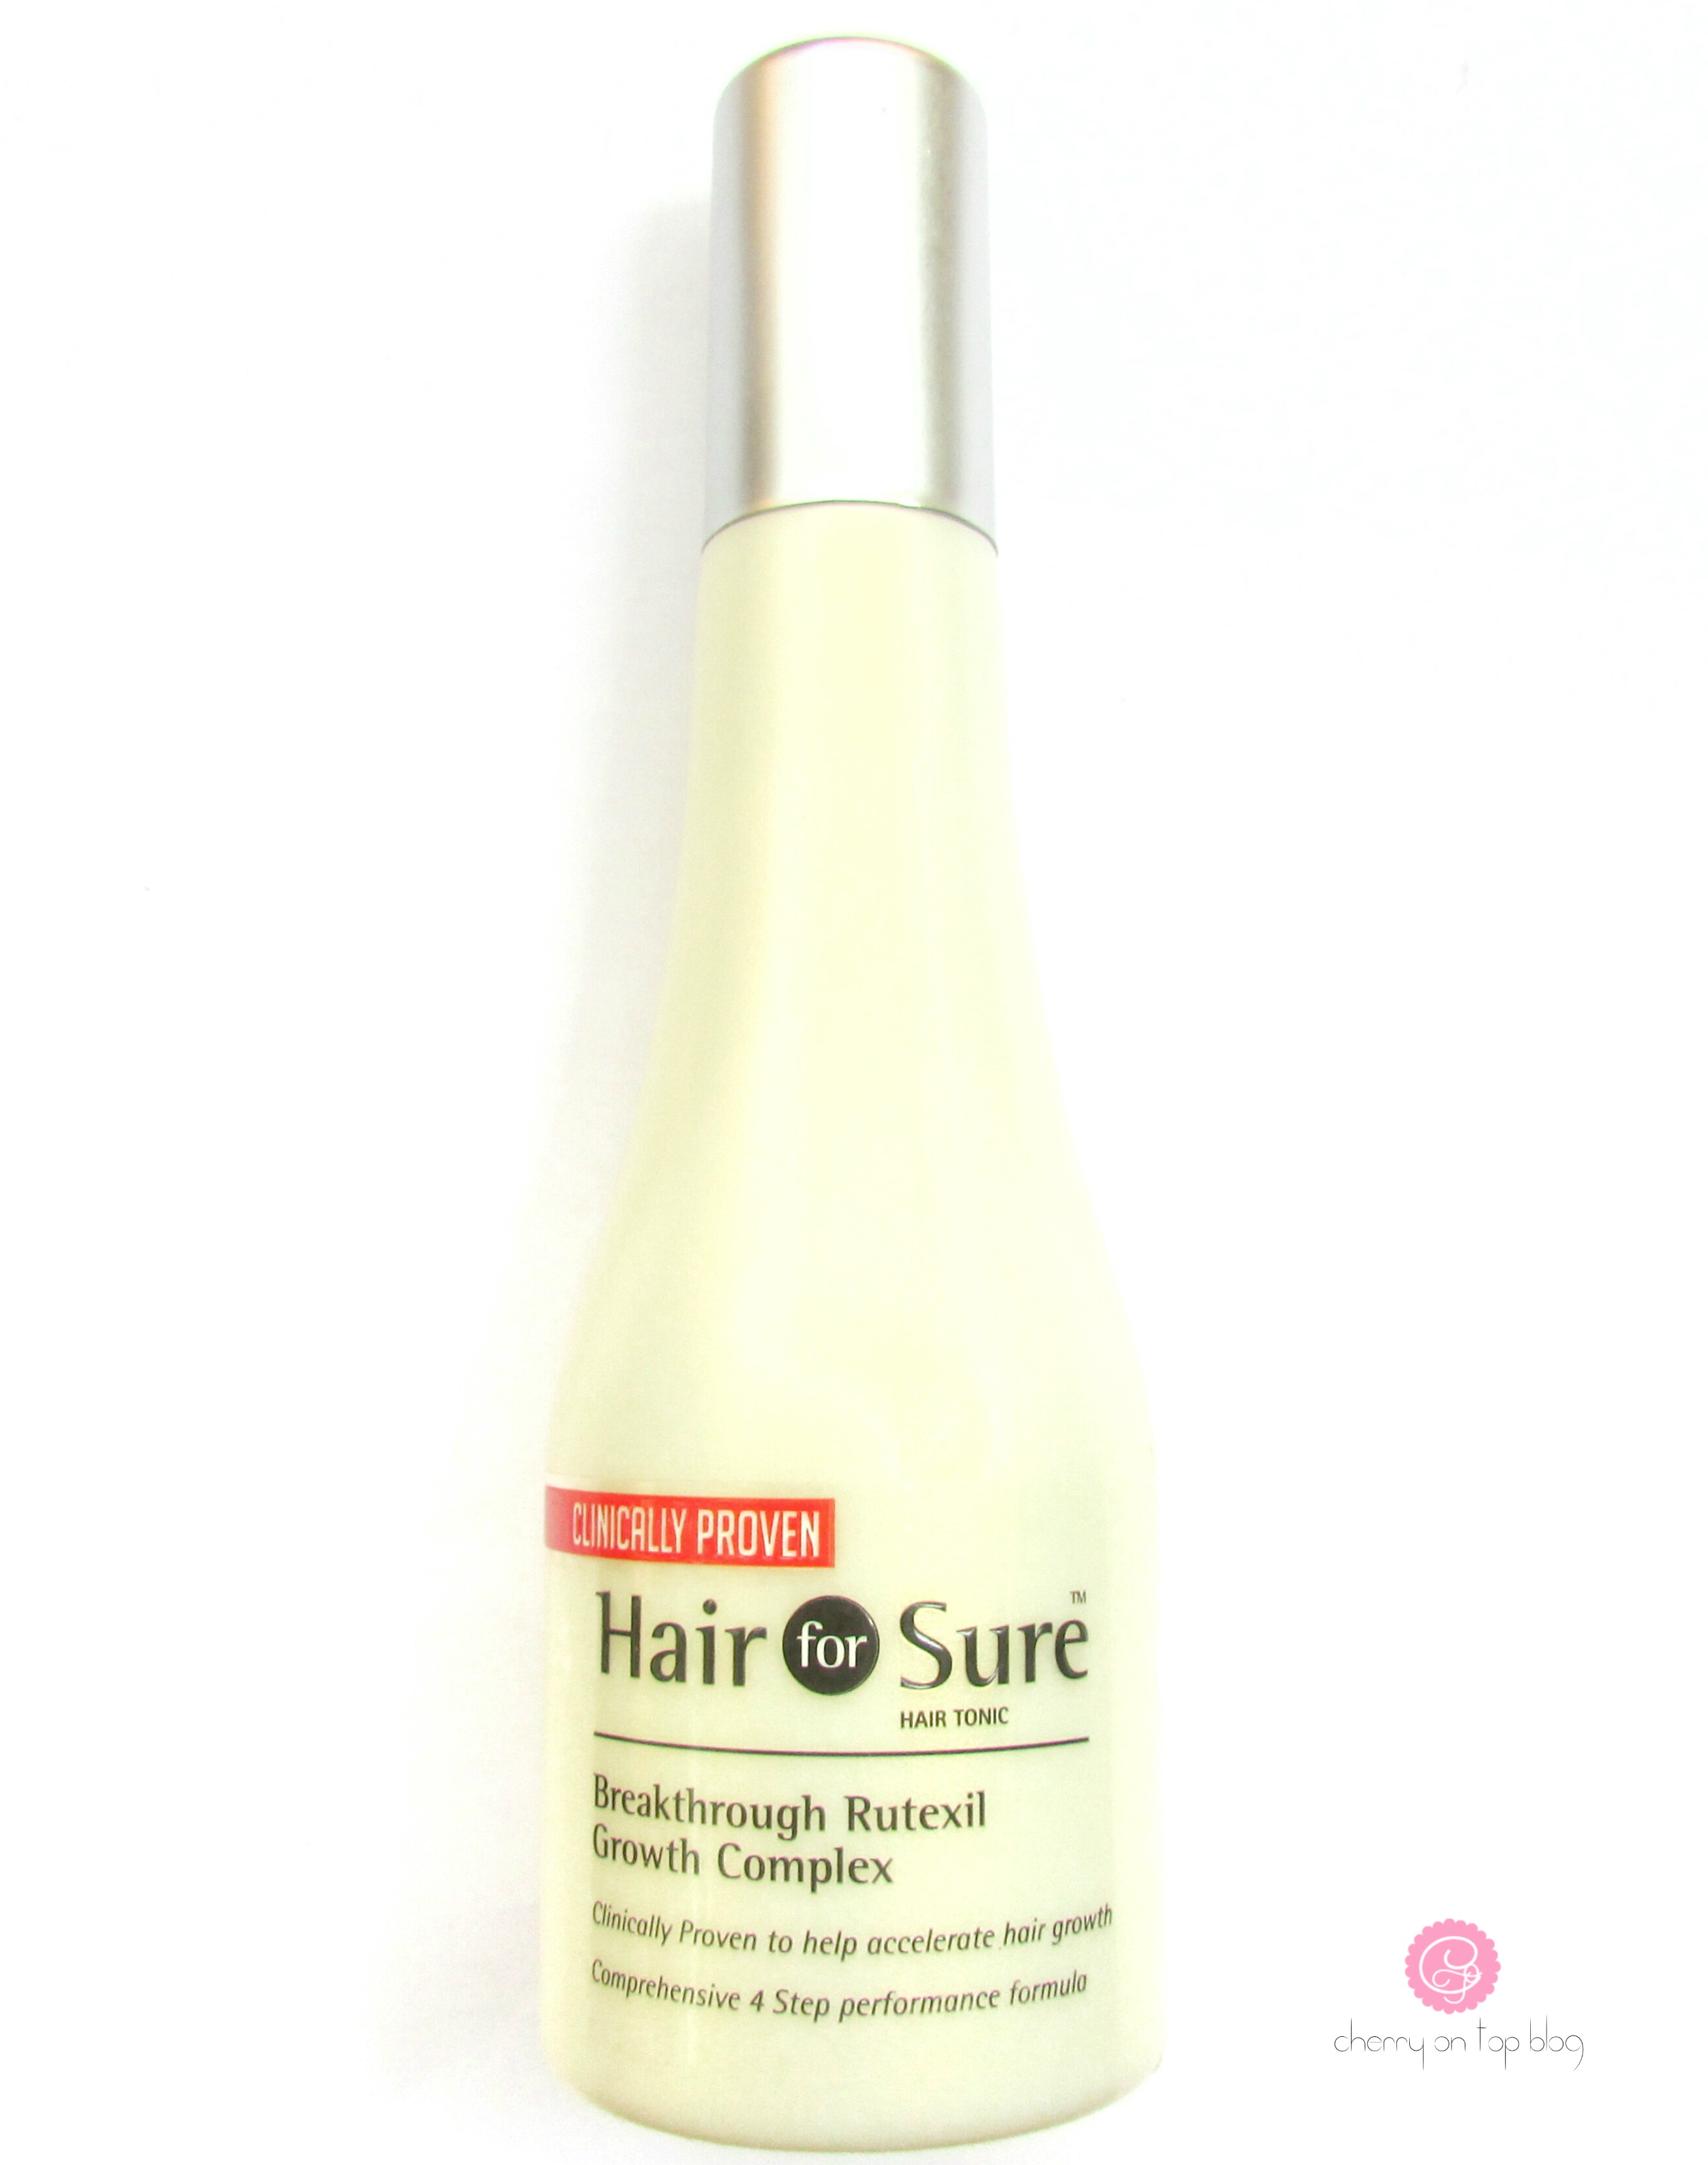 Hair for Sure Hair Regrowth Treatment Review | cherryontopblog.com